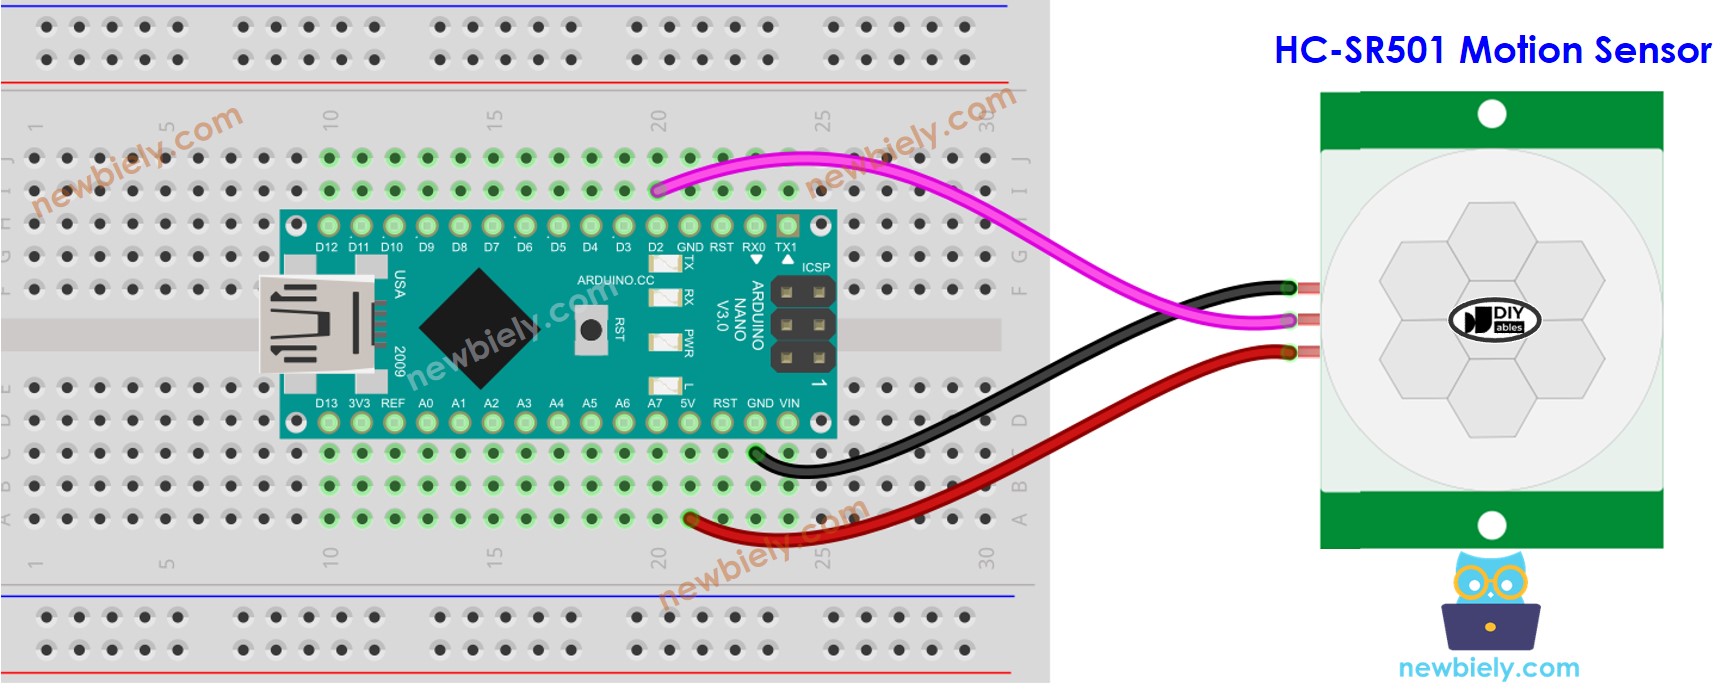 The wiring diagram between Arduino Nano and Motion Sensor